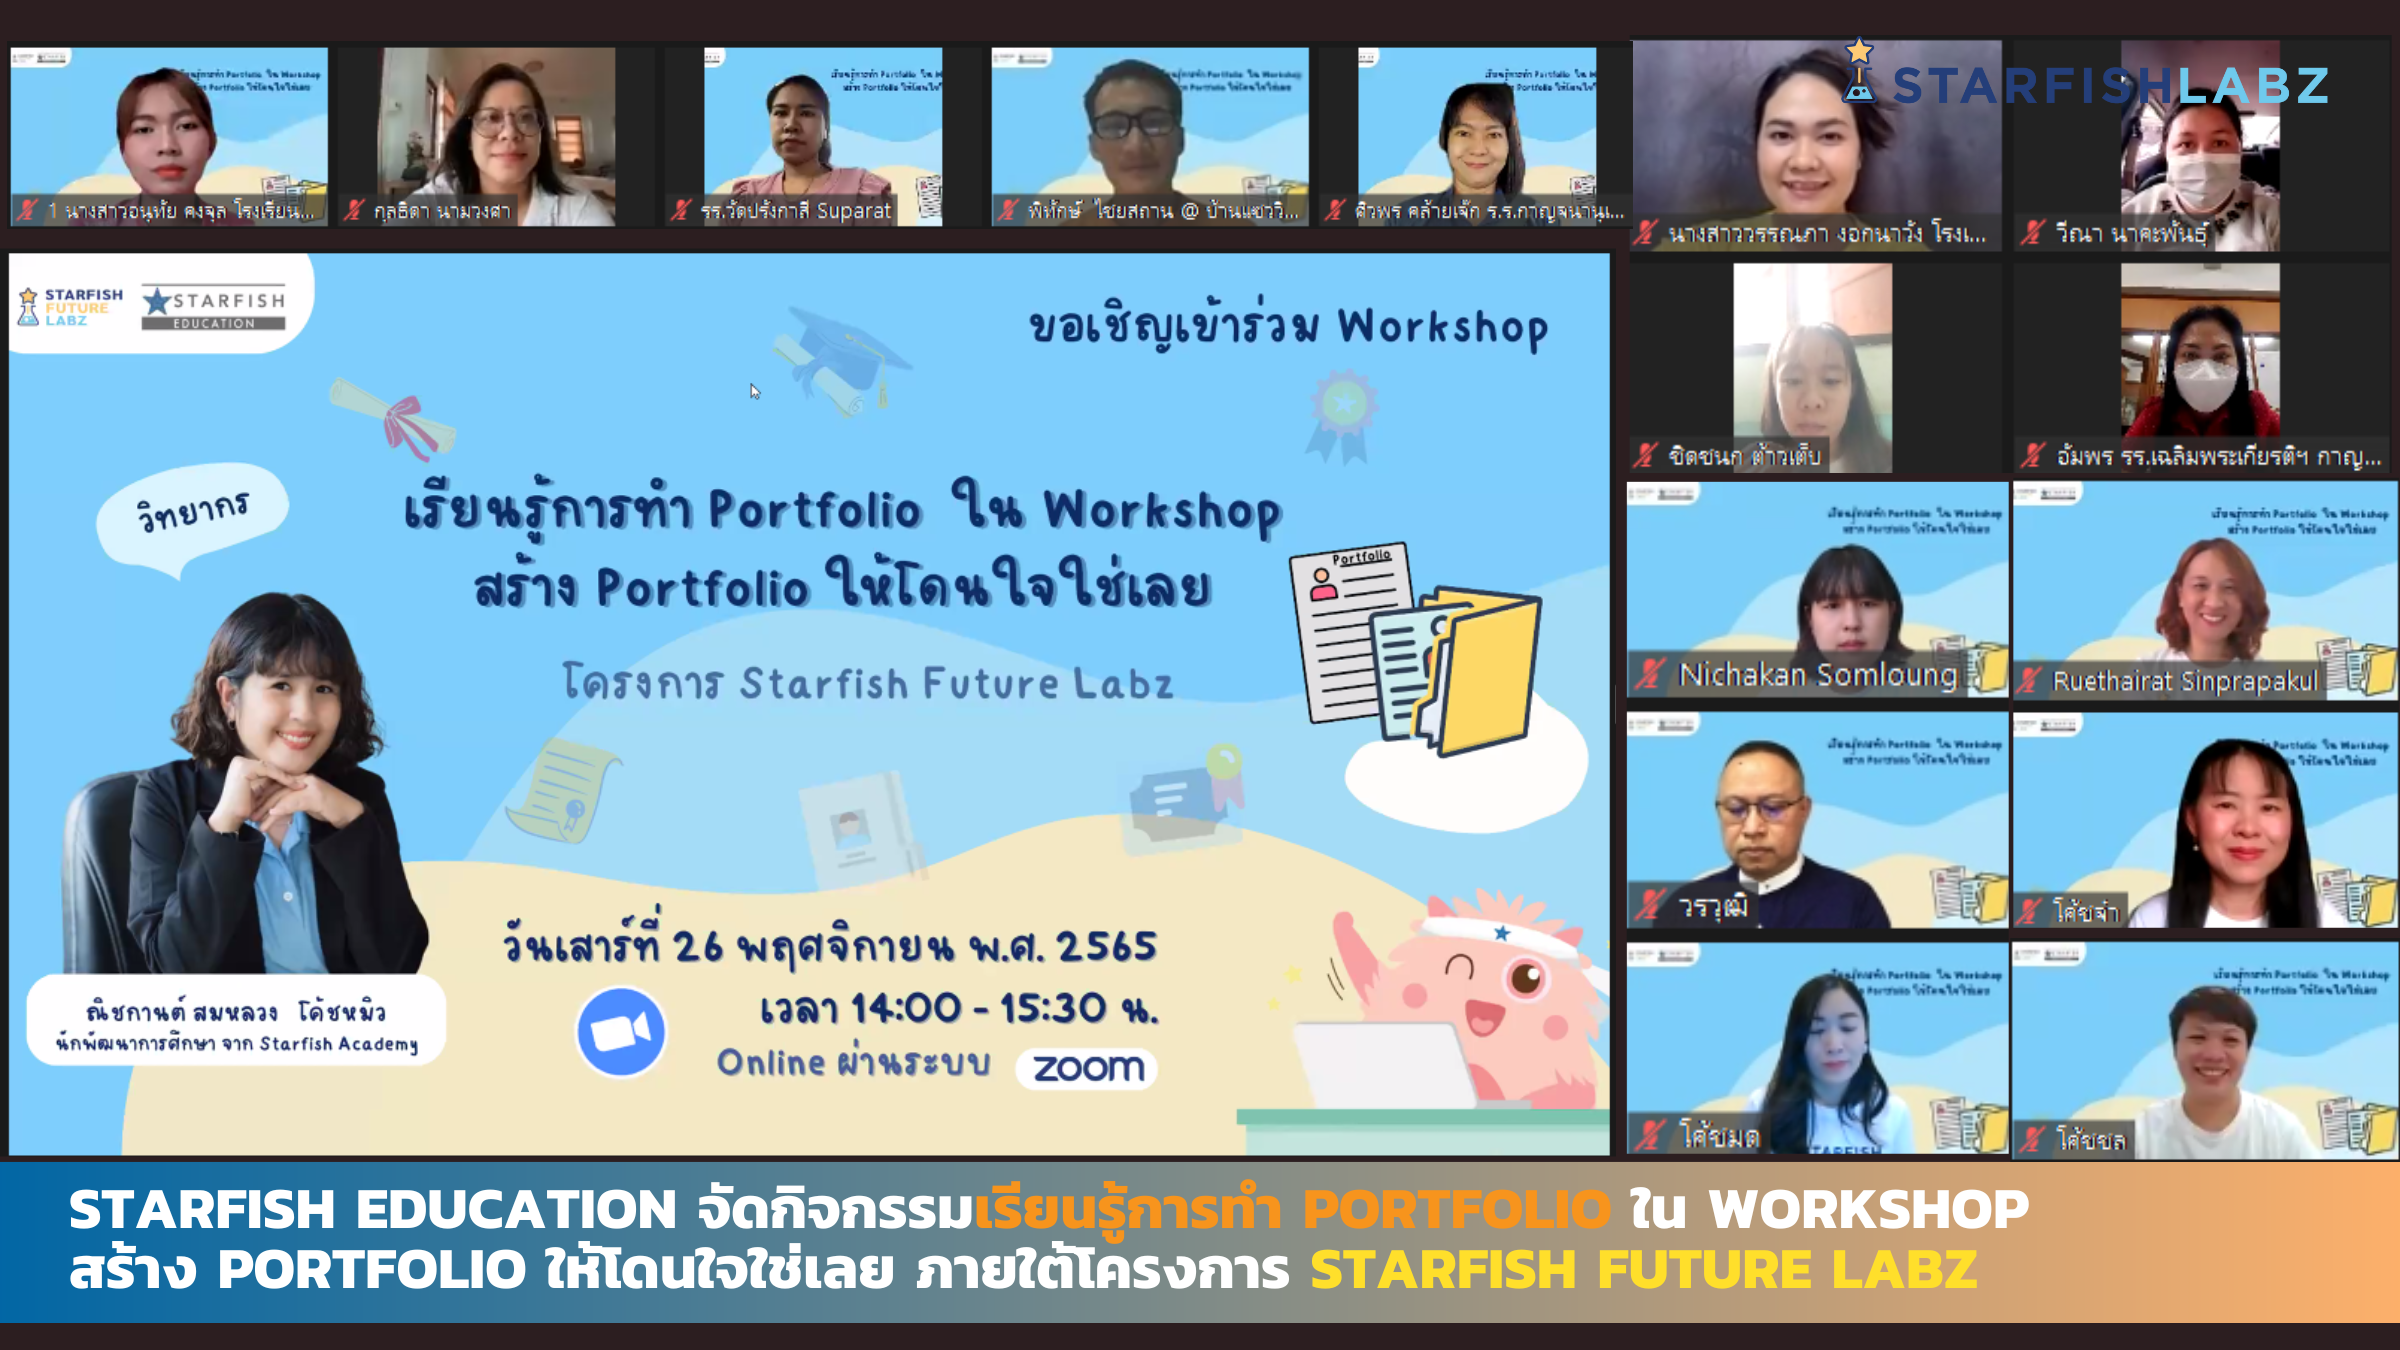 Starfish Education จัด Workshop ร่วมเรียนรู้วิธีการสร้างแฟ้มสะสมผลงาน Portfolio